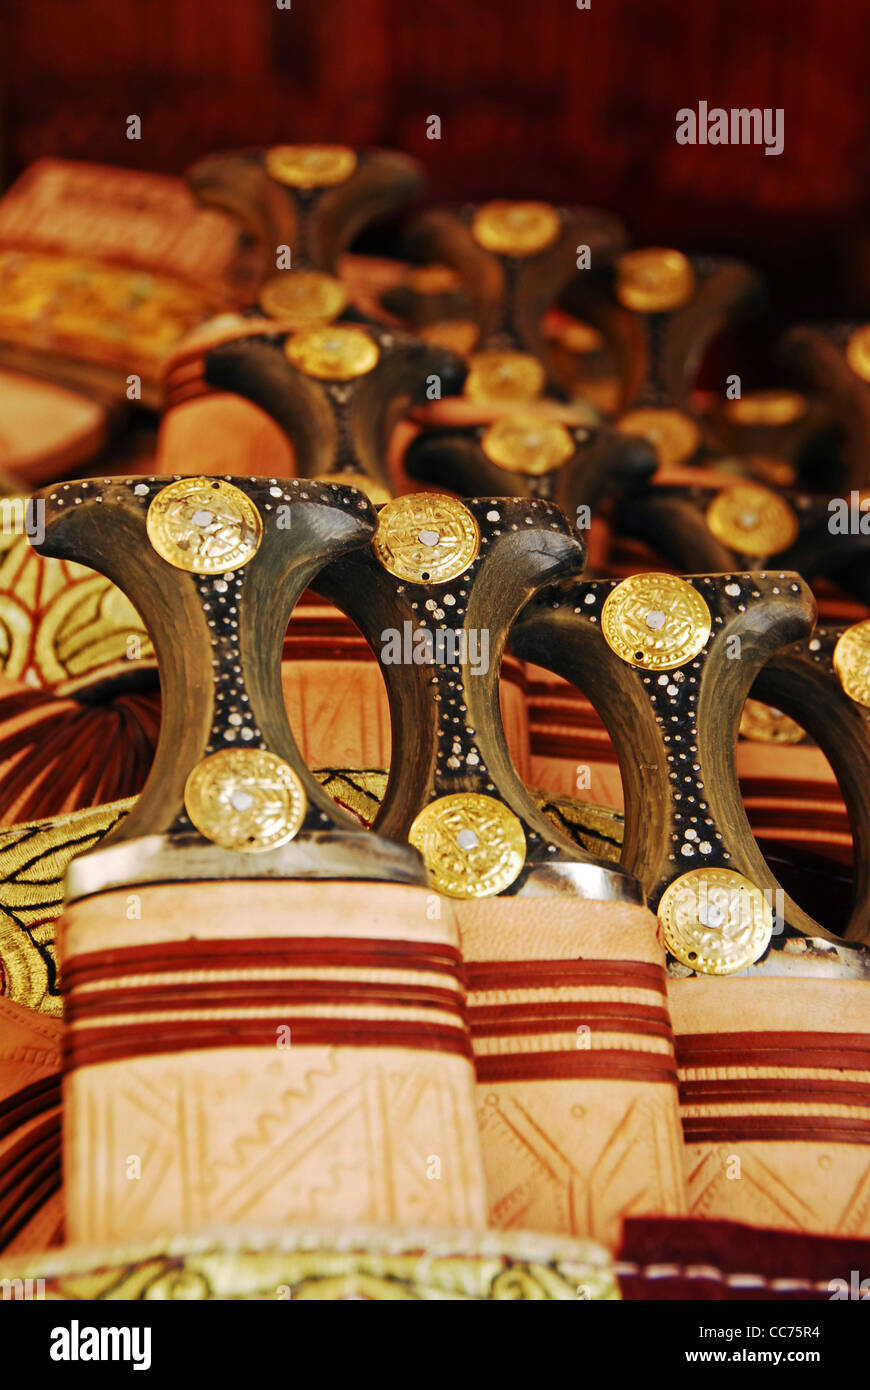 Yemen, Sanaa, close-up of designed Jambiya daggers kept for sale Stock Photo